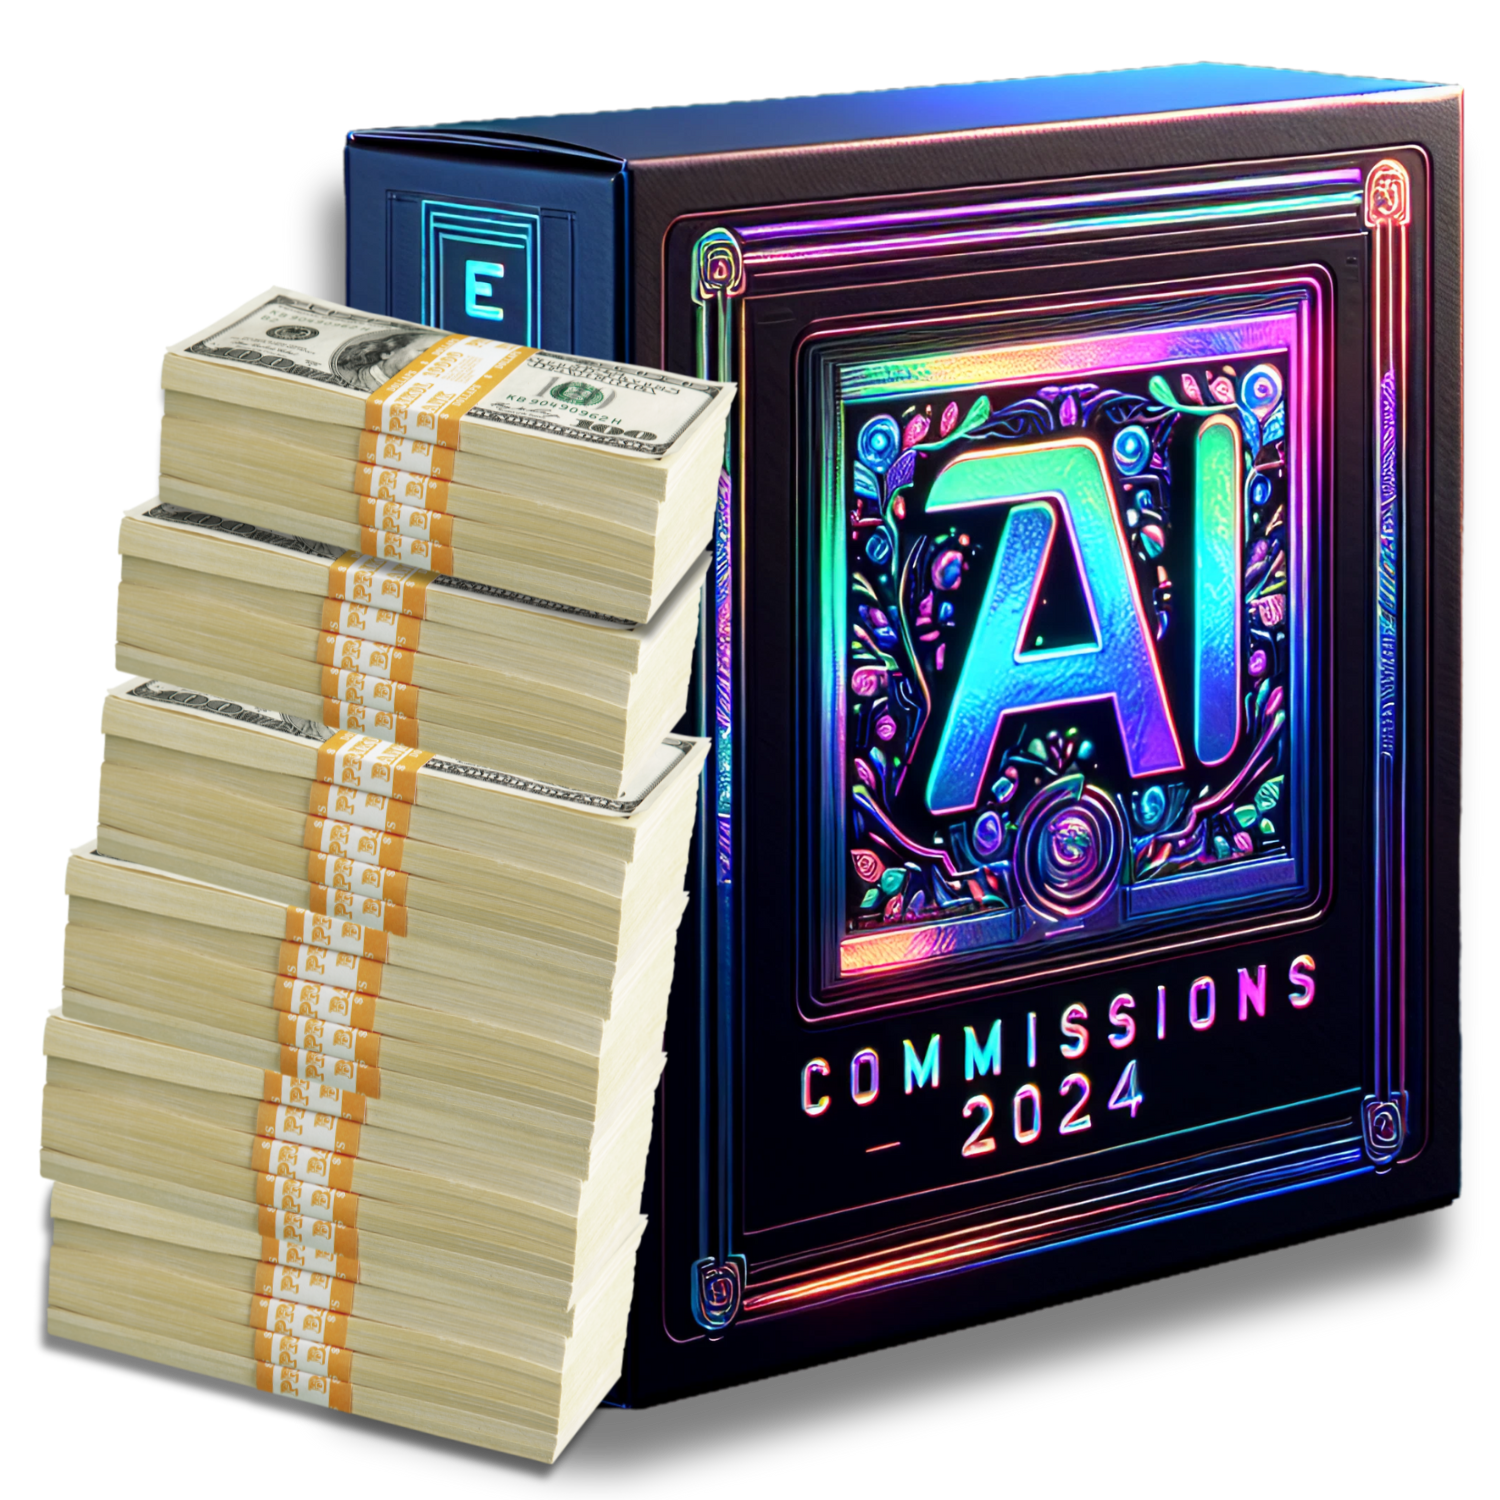 AI Commission 2024 Review